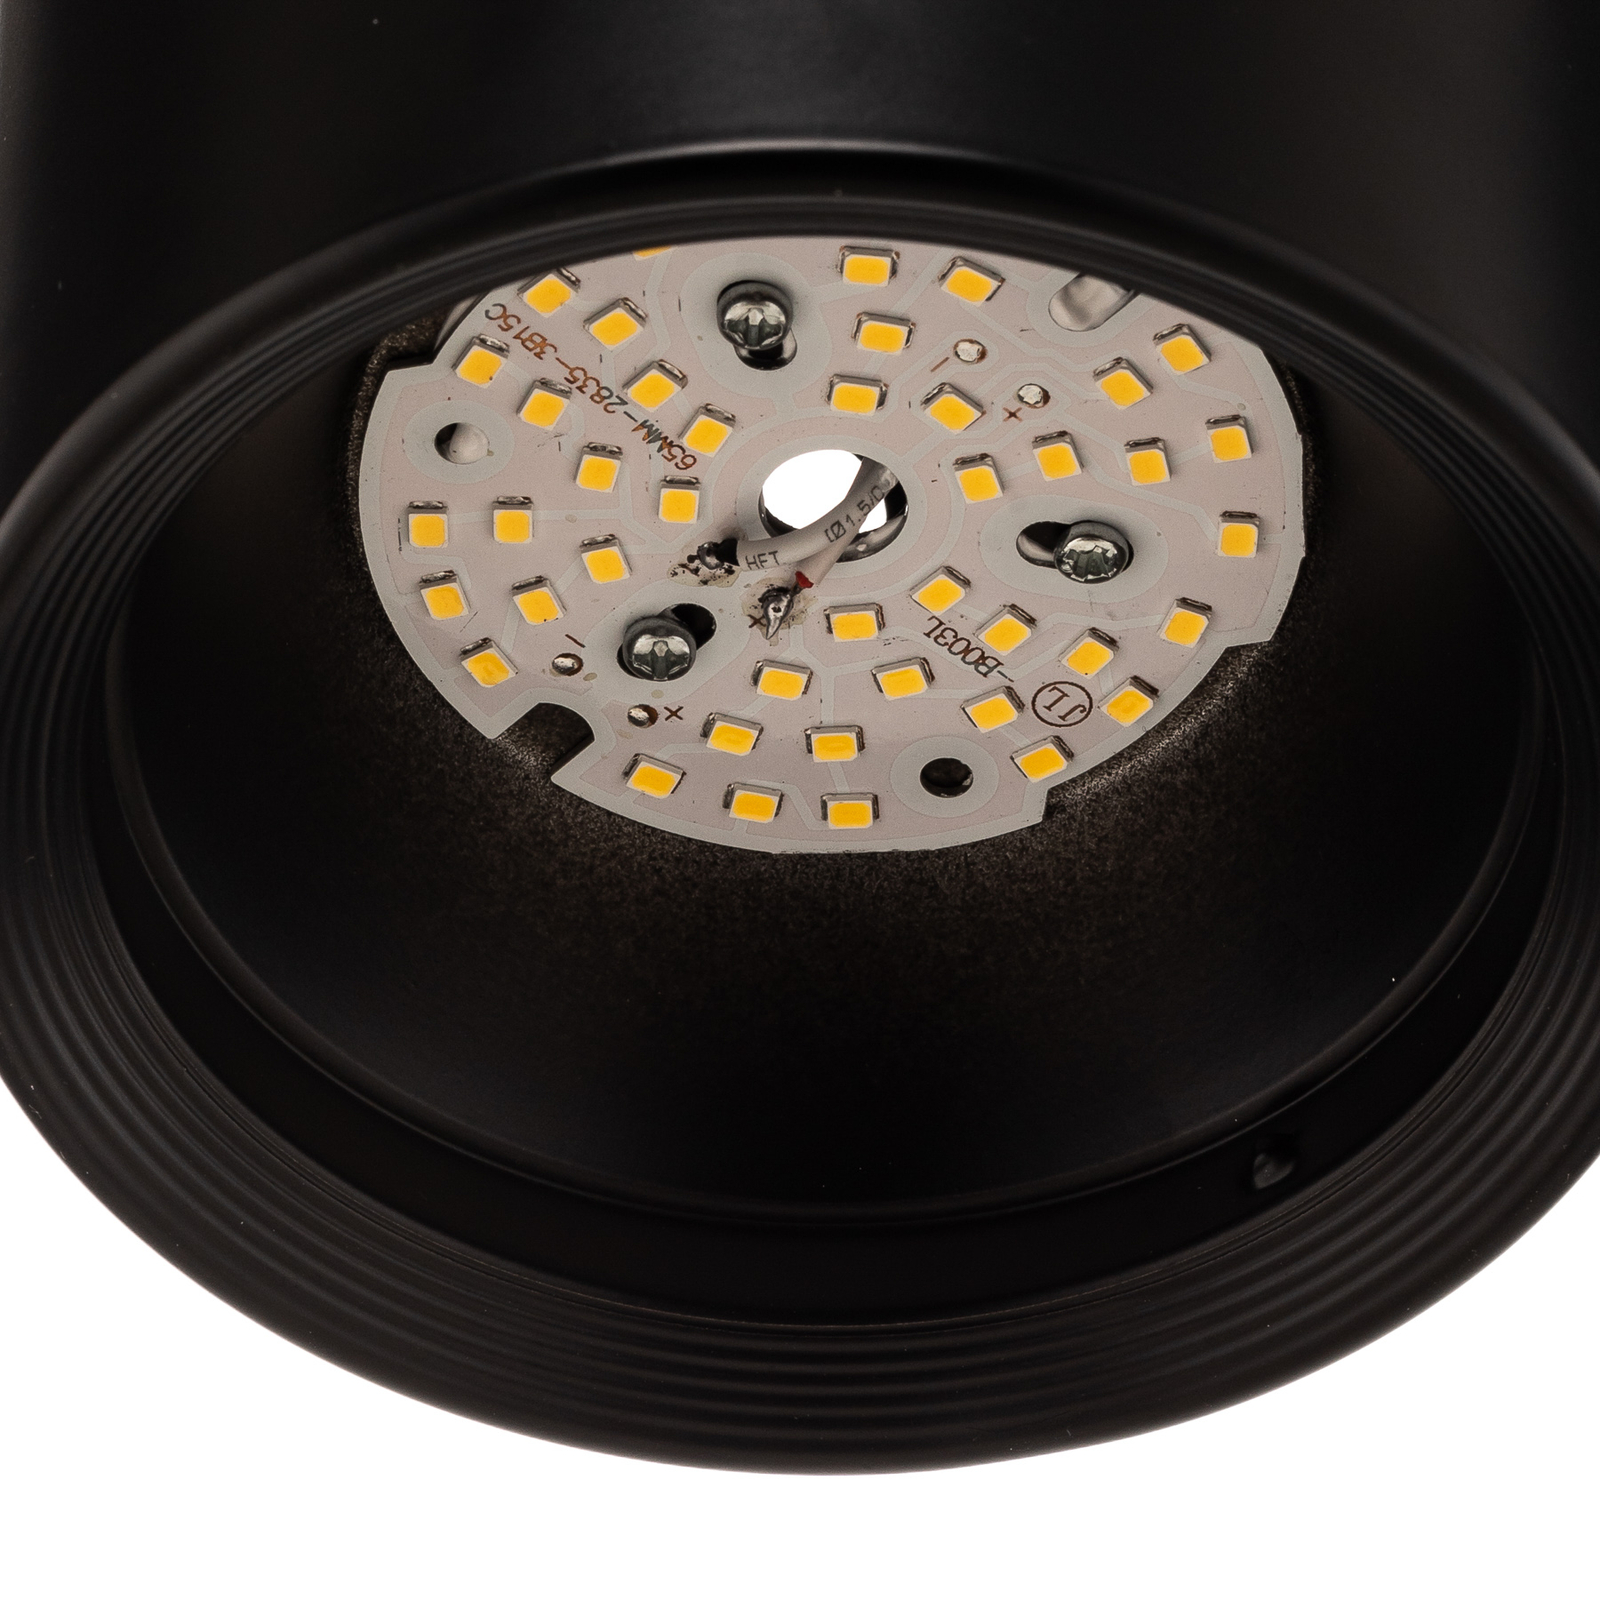 LED downlight Ita in black with diffuser, Ø 10 cm